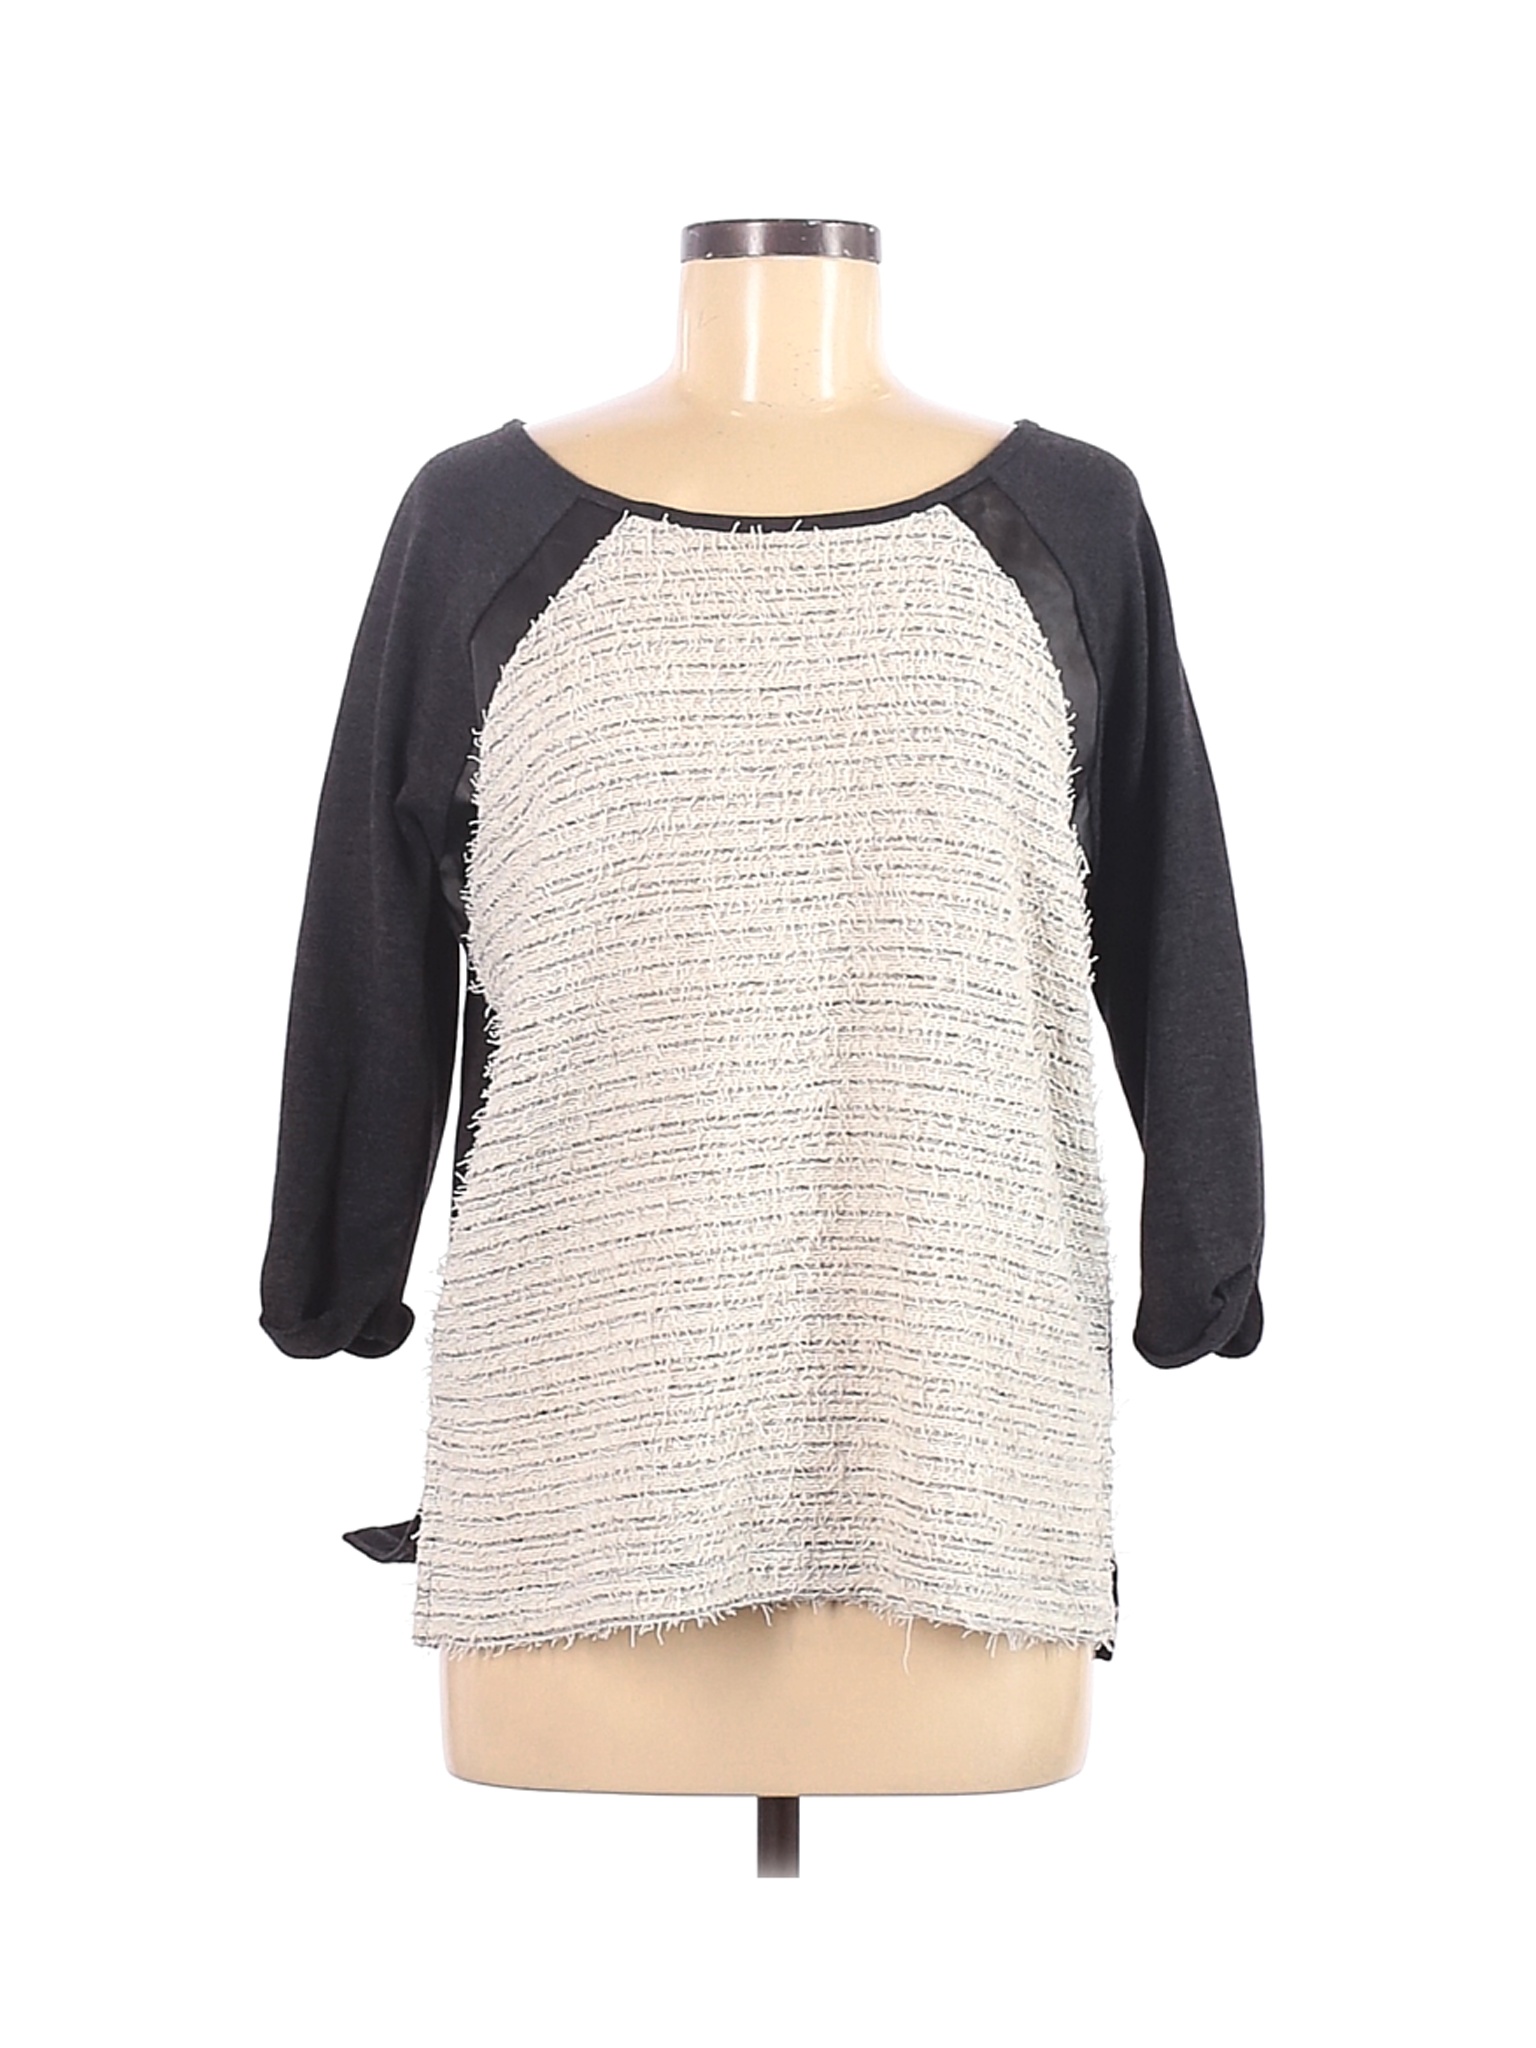 Jessica Simpson Women Ivory Pullover Sweater M | eBay